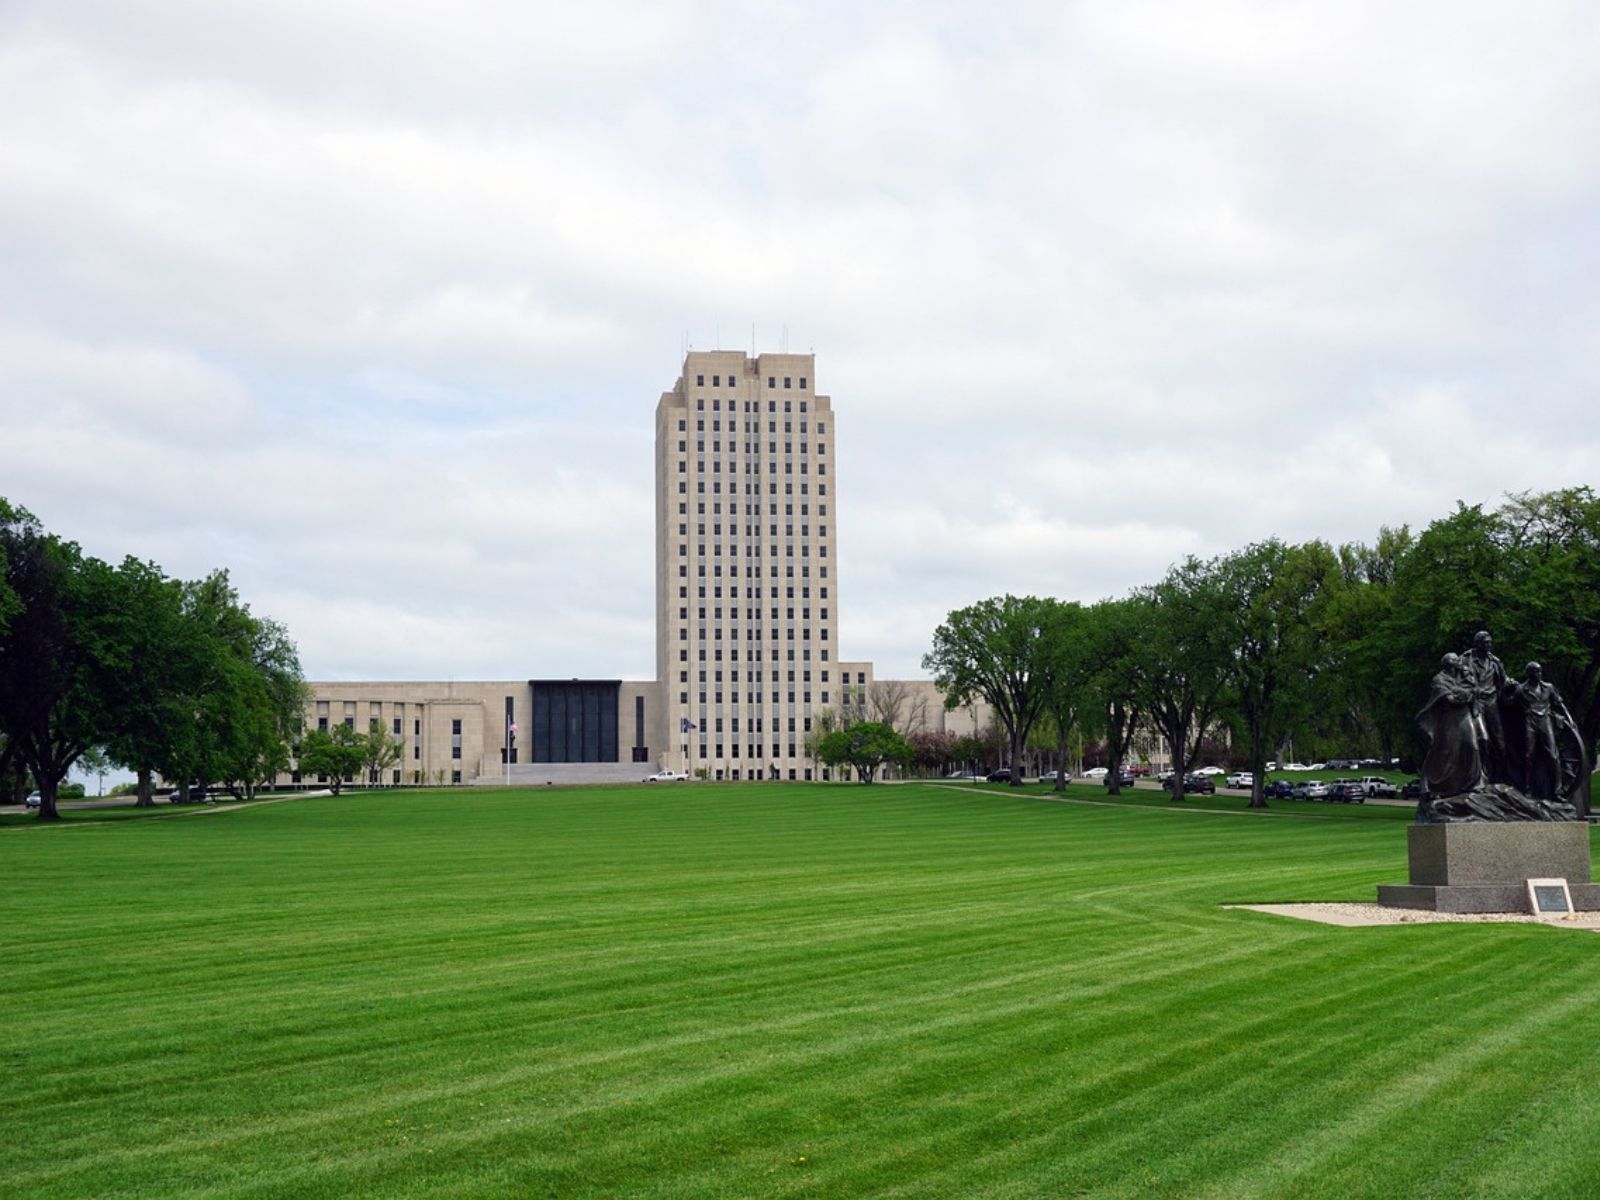 Bismarck North Dakota Capital Building